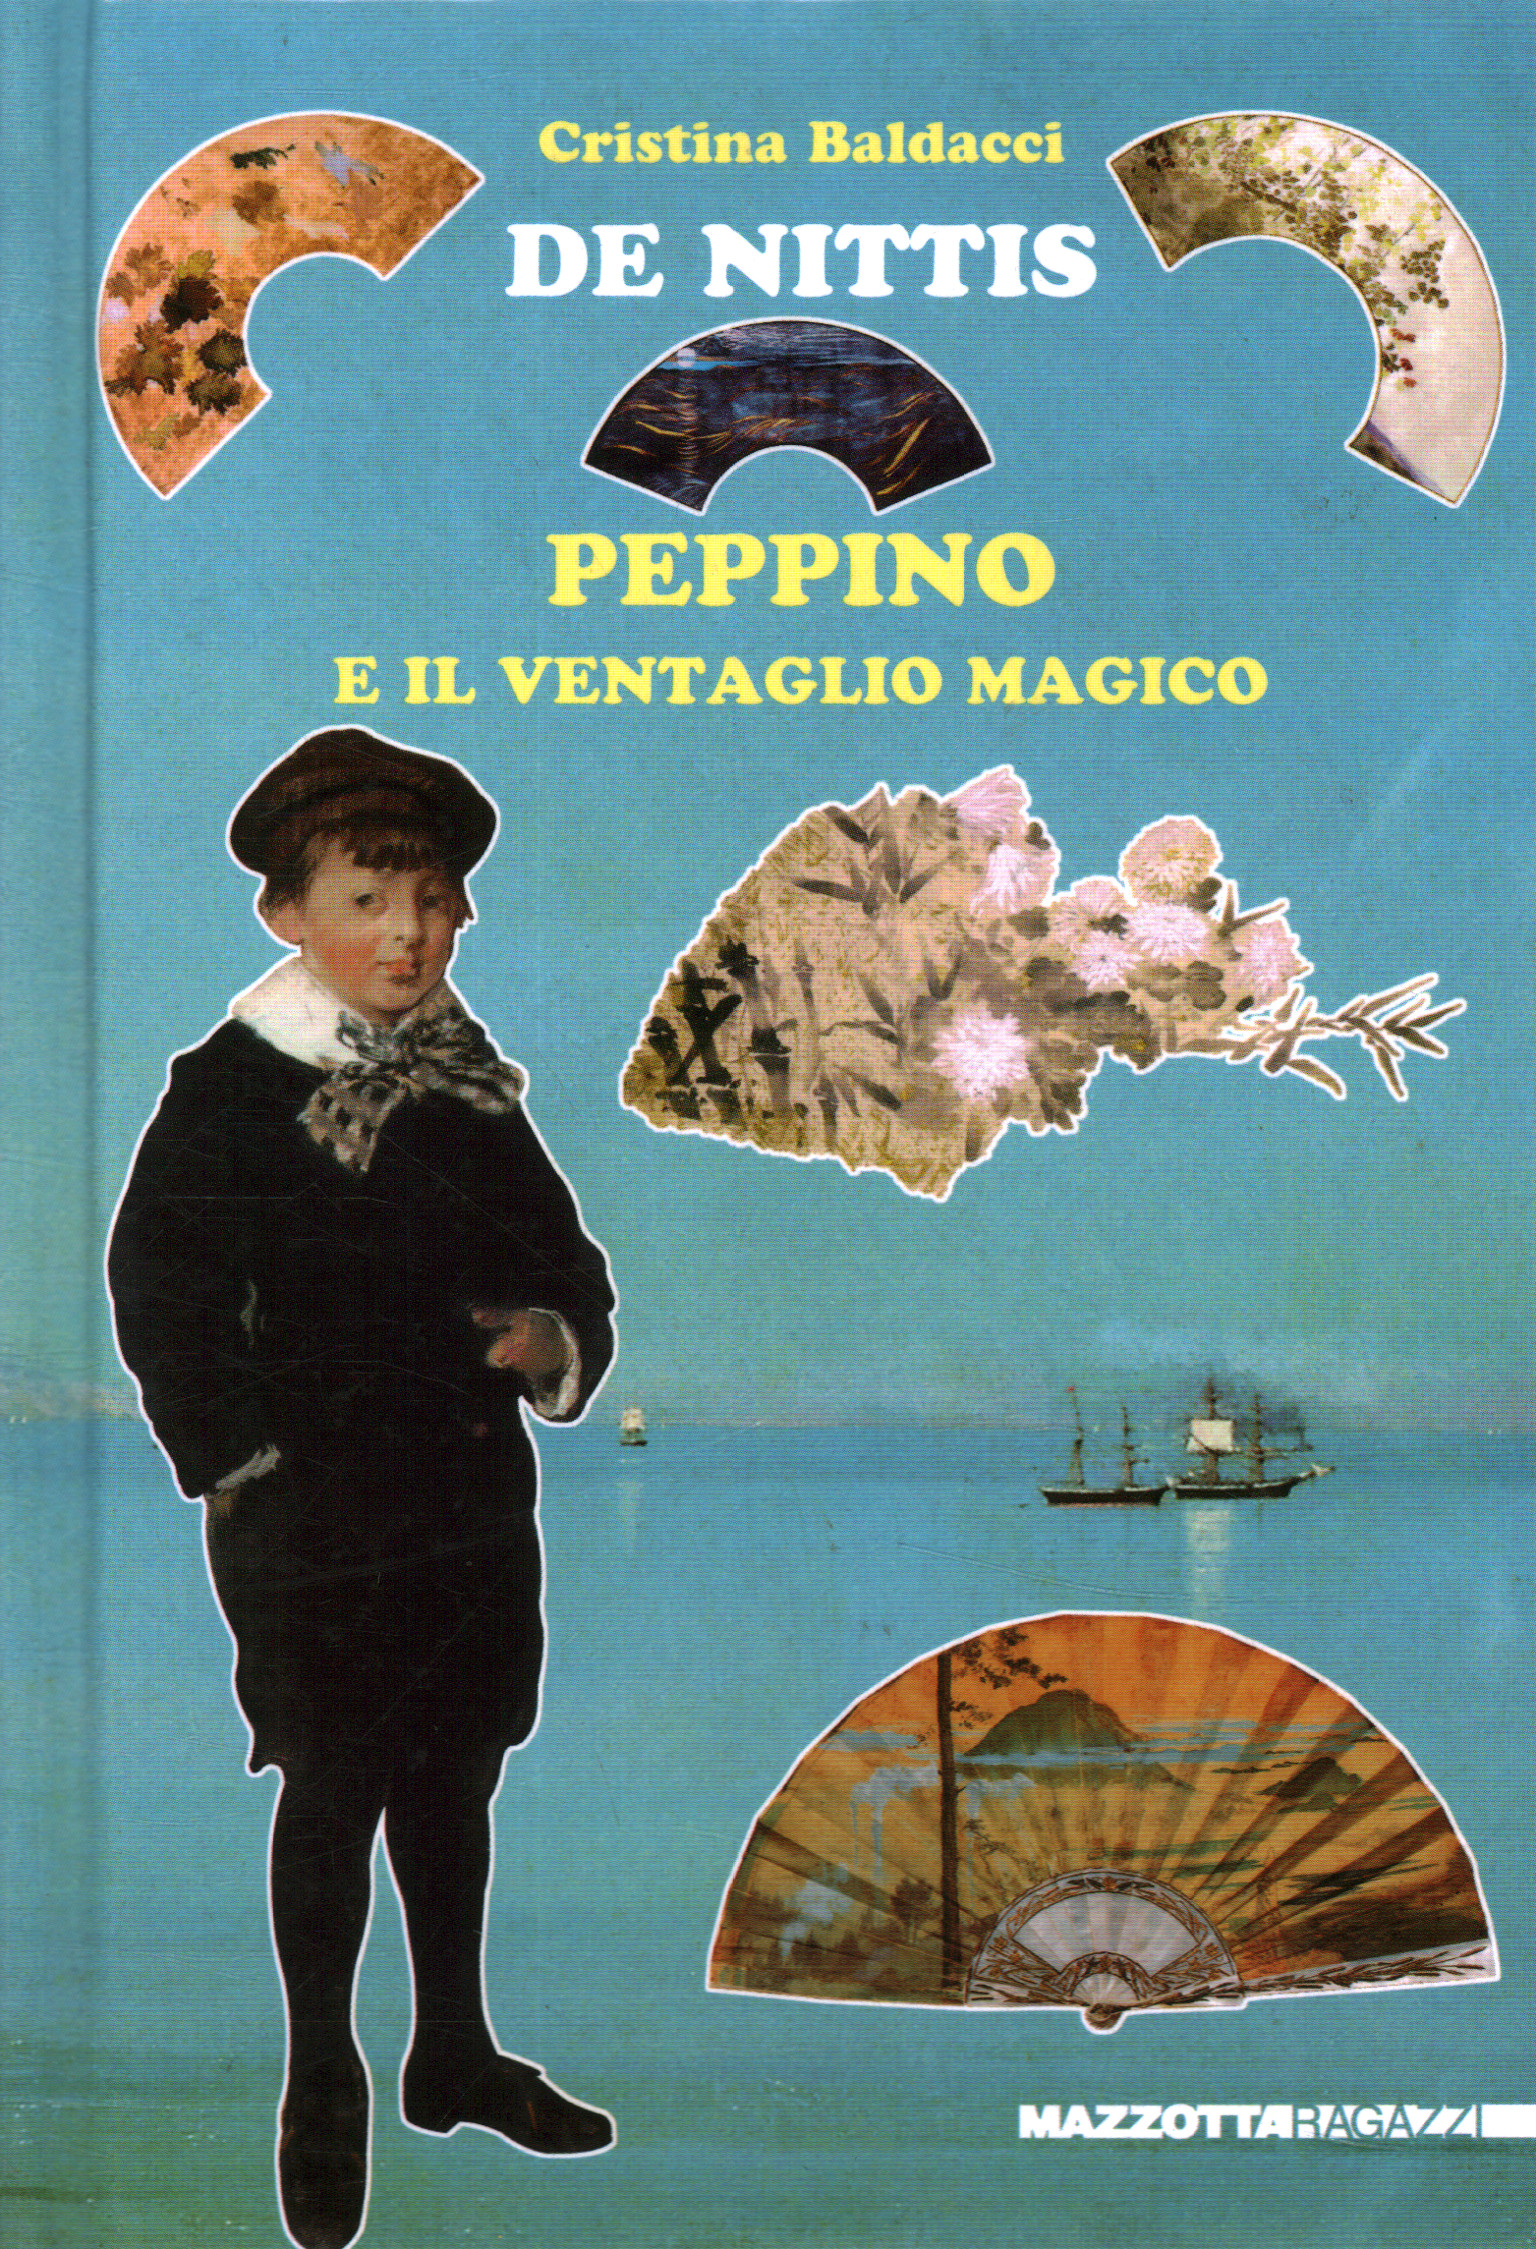 De Nittis. Peppino und der Zauberfan Cristina Baldacci